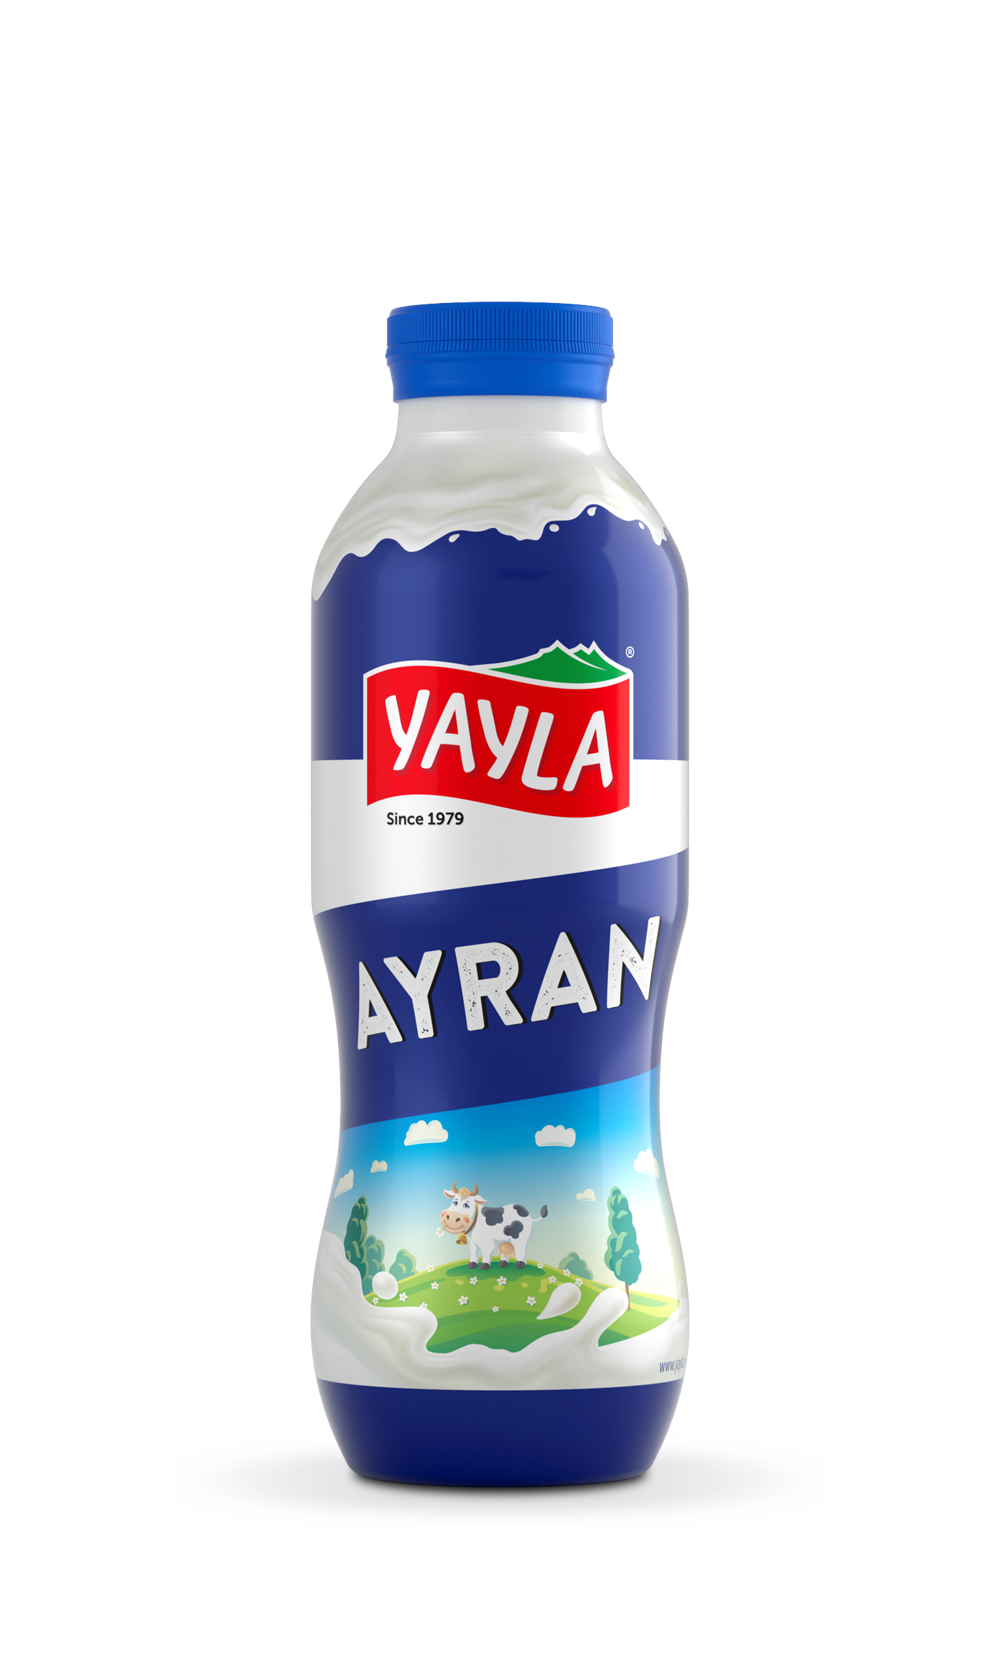 Ayran-Joghurt-Drink nach türki­scher Art